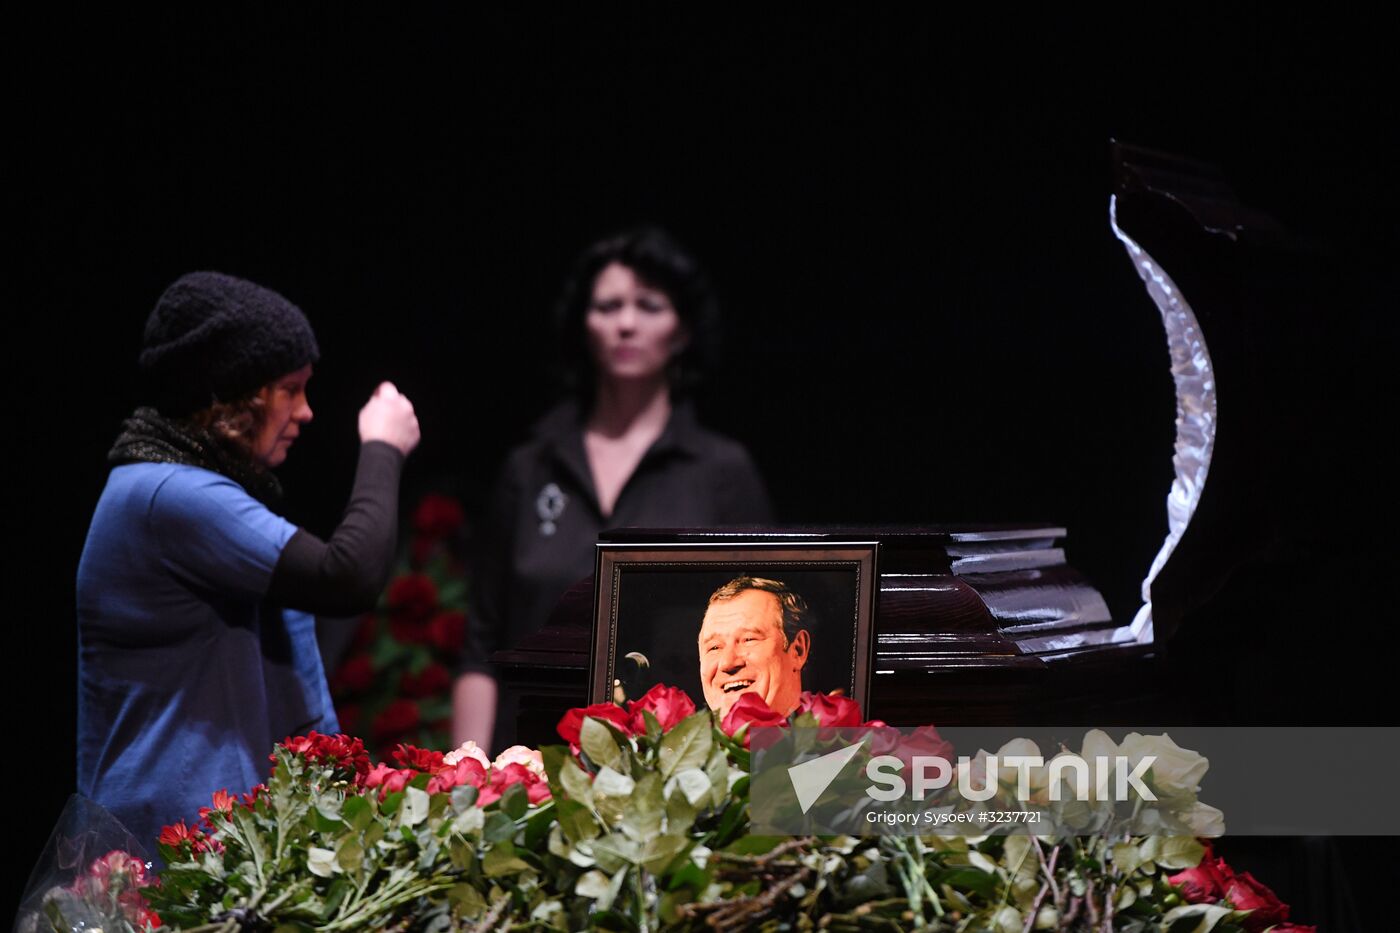 Paying last respects to actor Vitaly Shapovalov